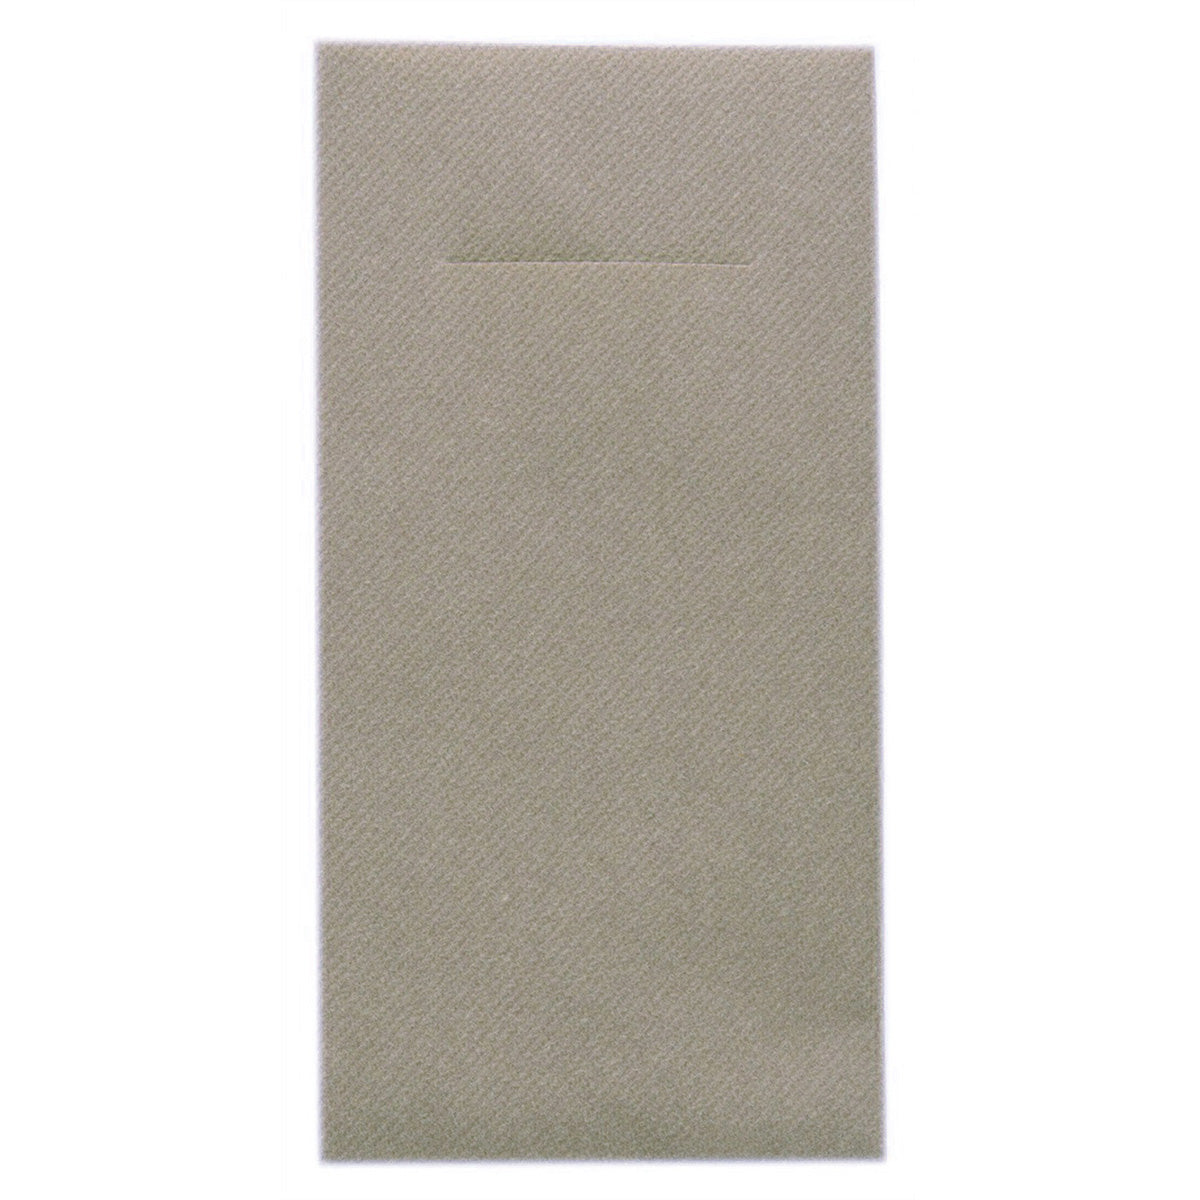 Linclass-Professional-Bestecktasche-beige-grau 40 x 40 cm 1/8 Falz